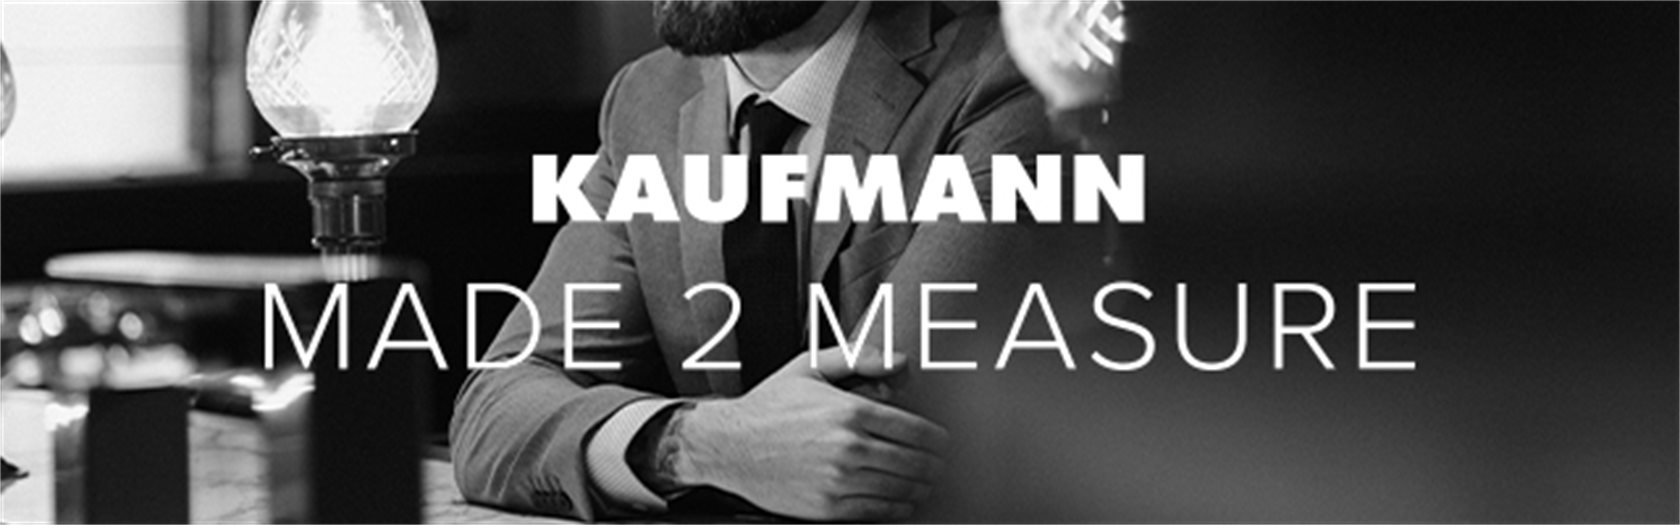 KAUFMANN Made 2 Measure